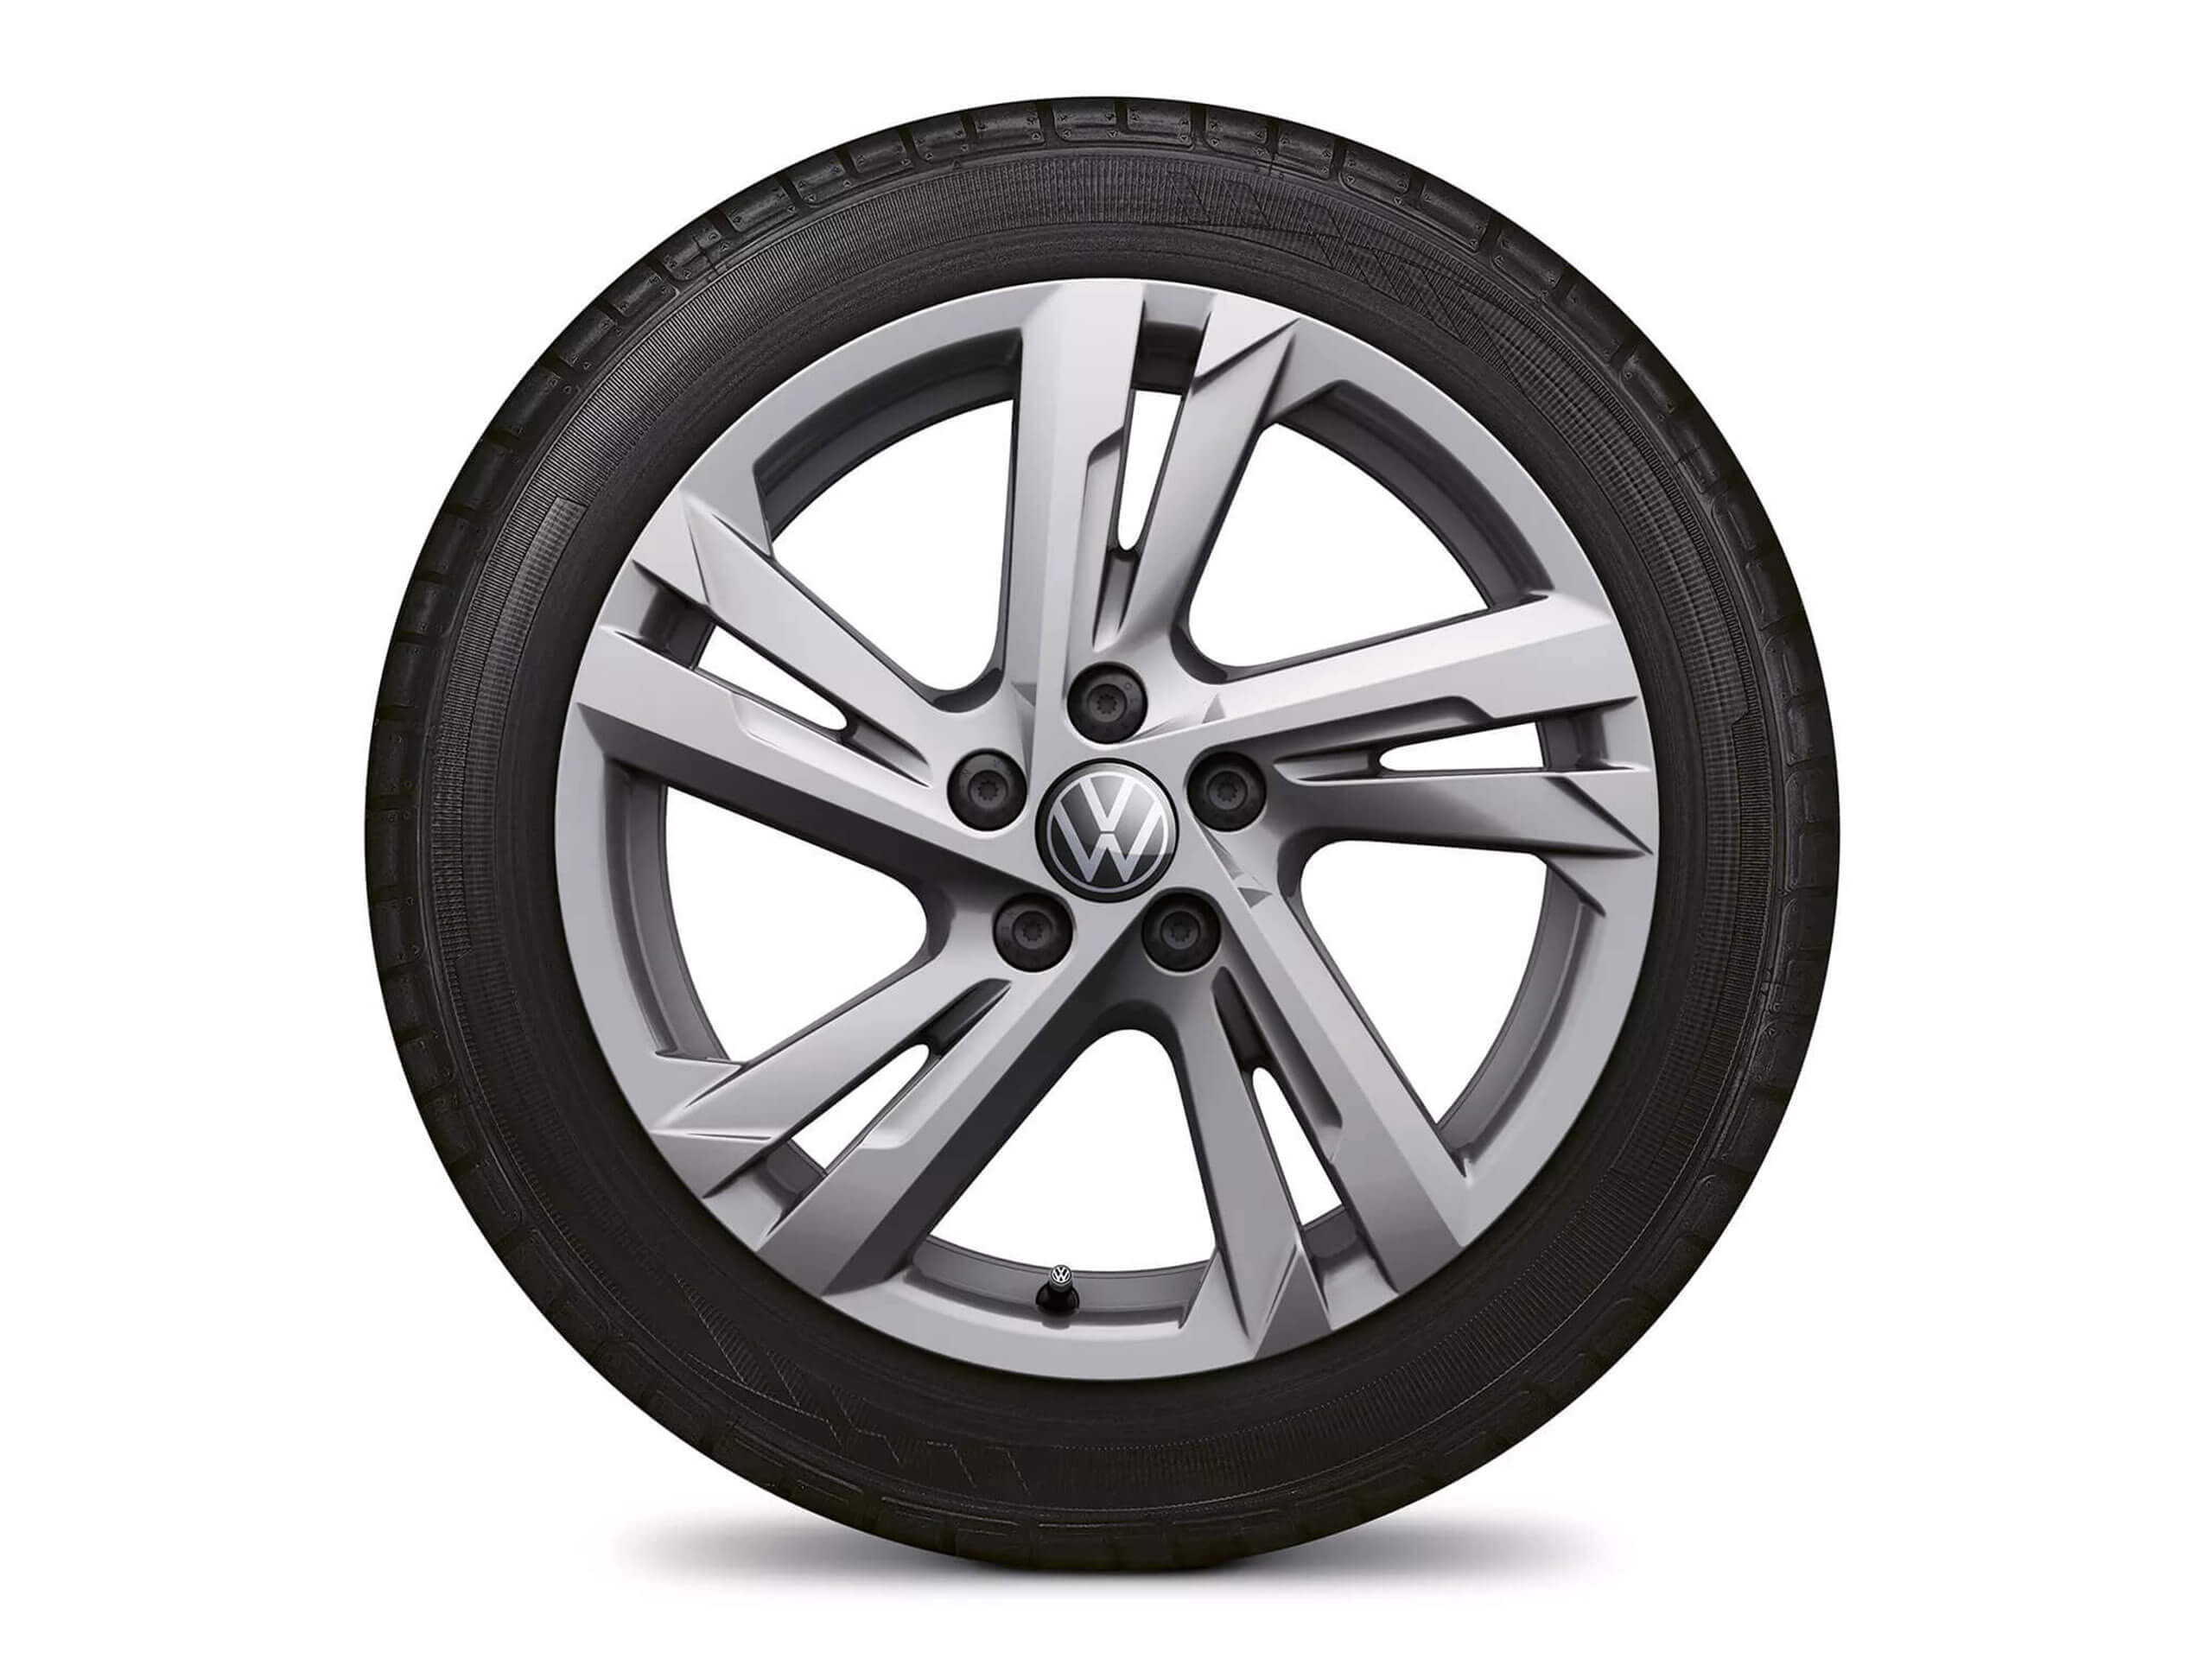 16" Valencia alloy wheel